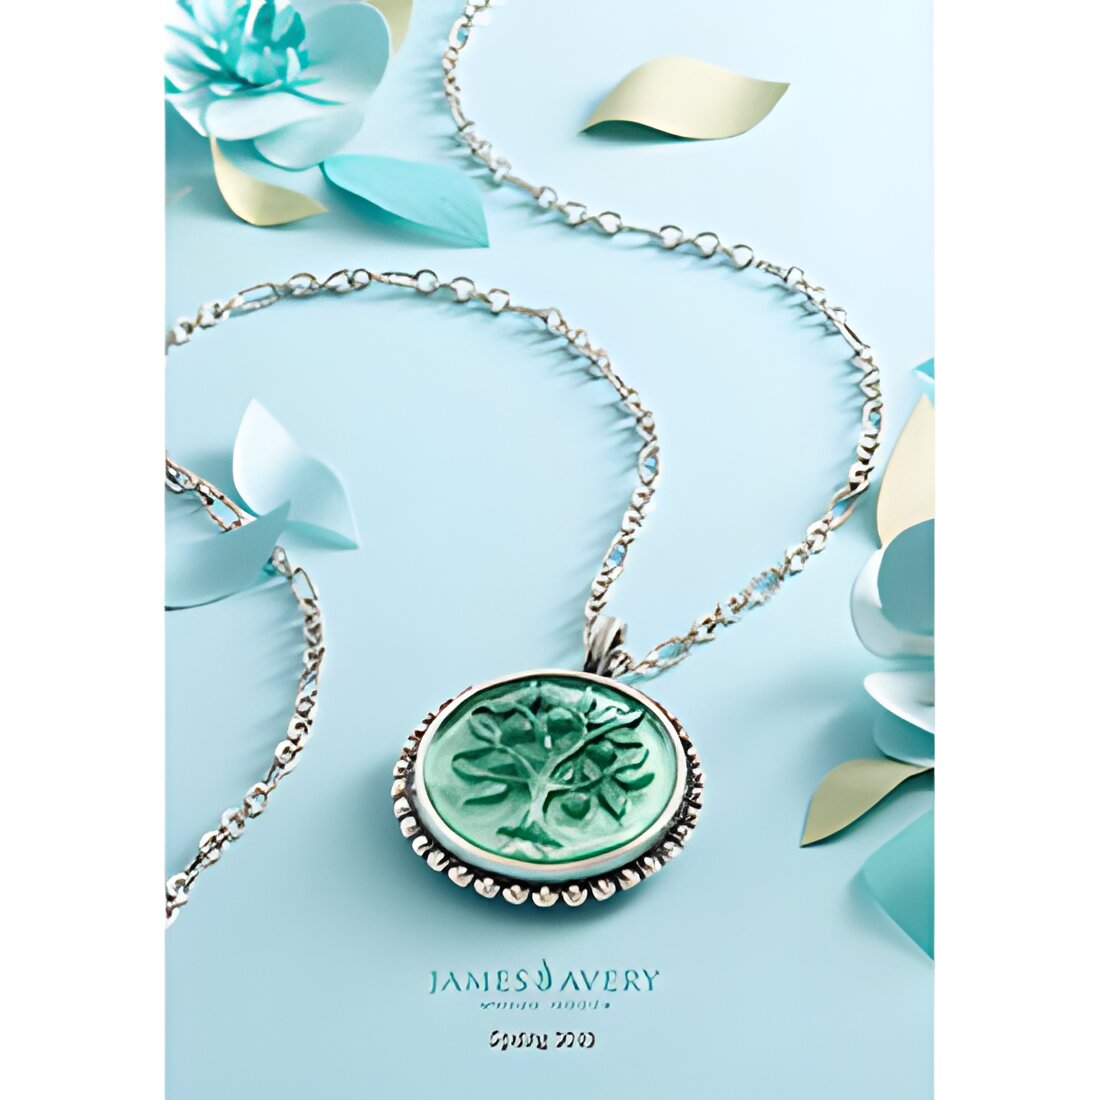 Free James Avery Artisan Jewelry Catalog